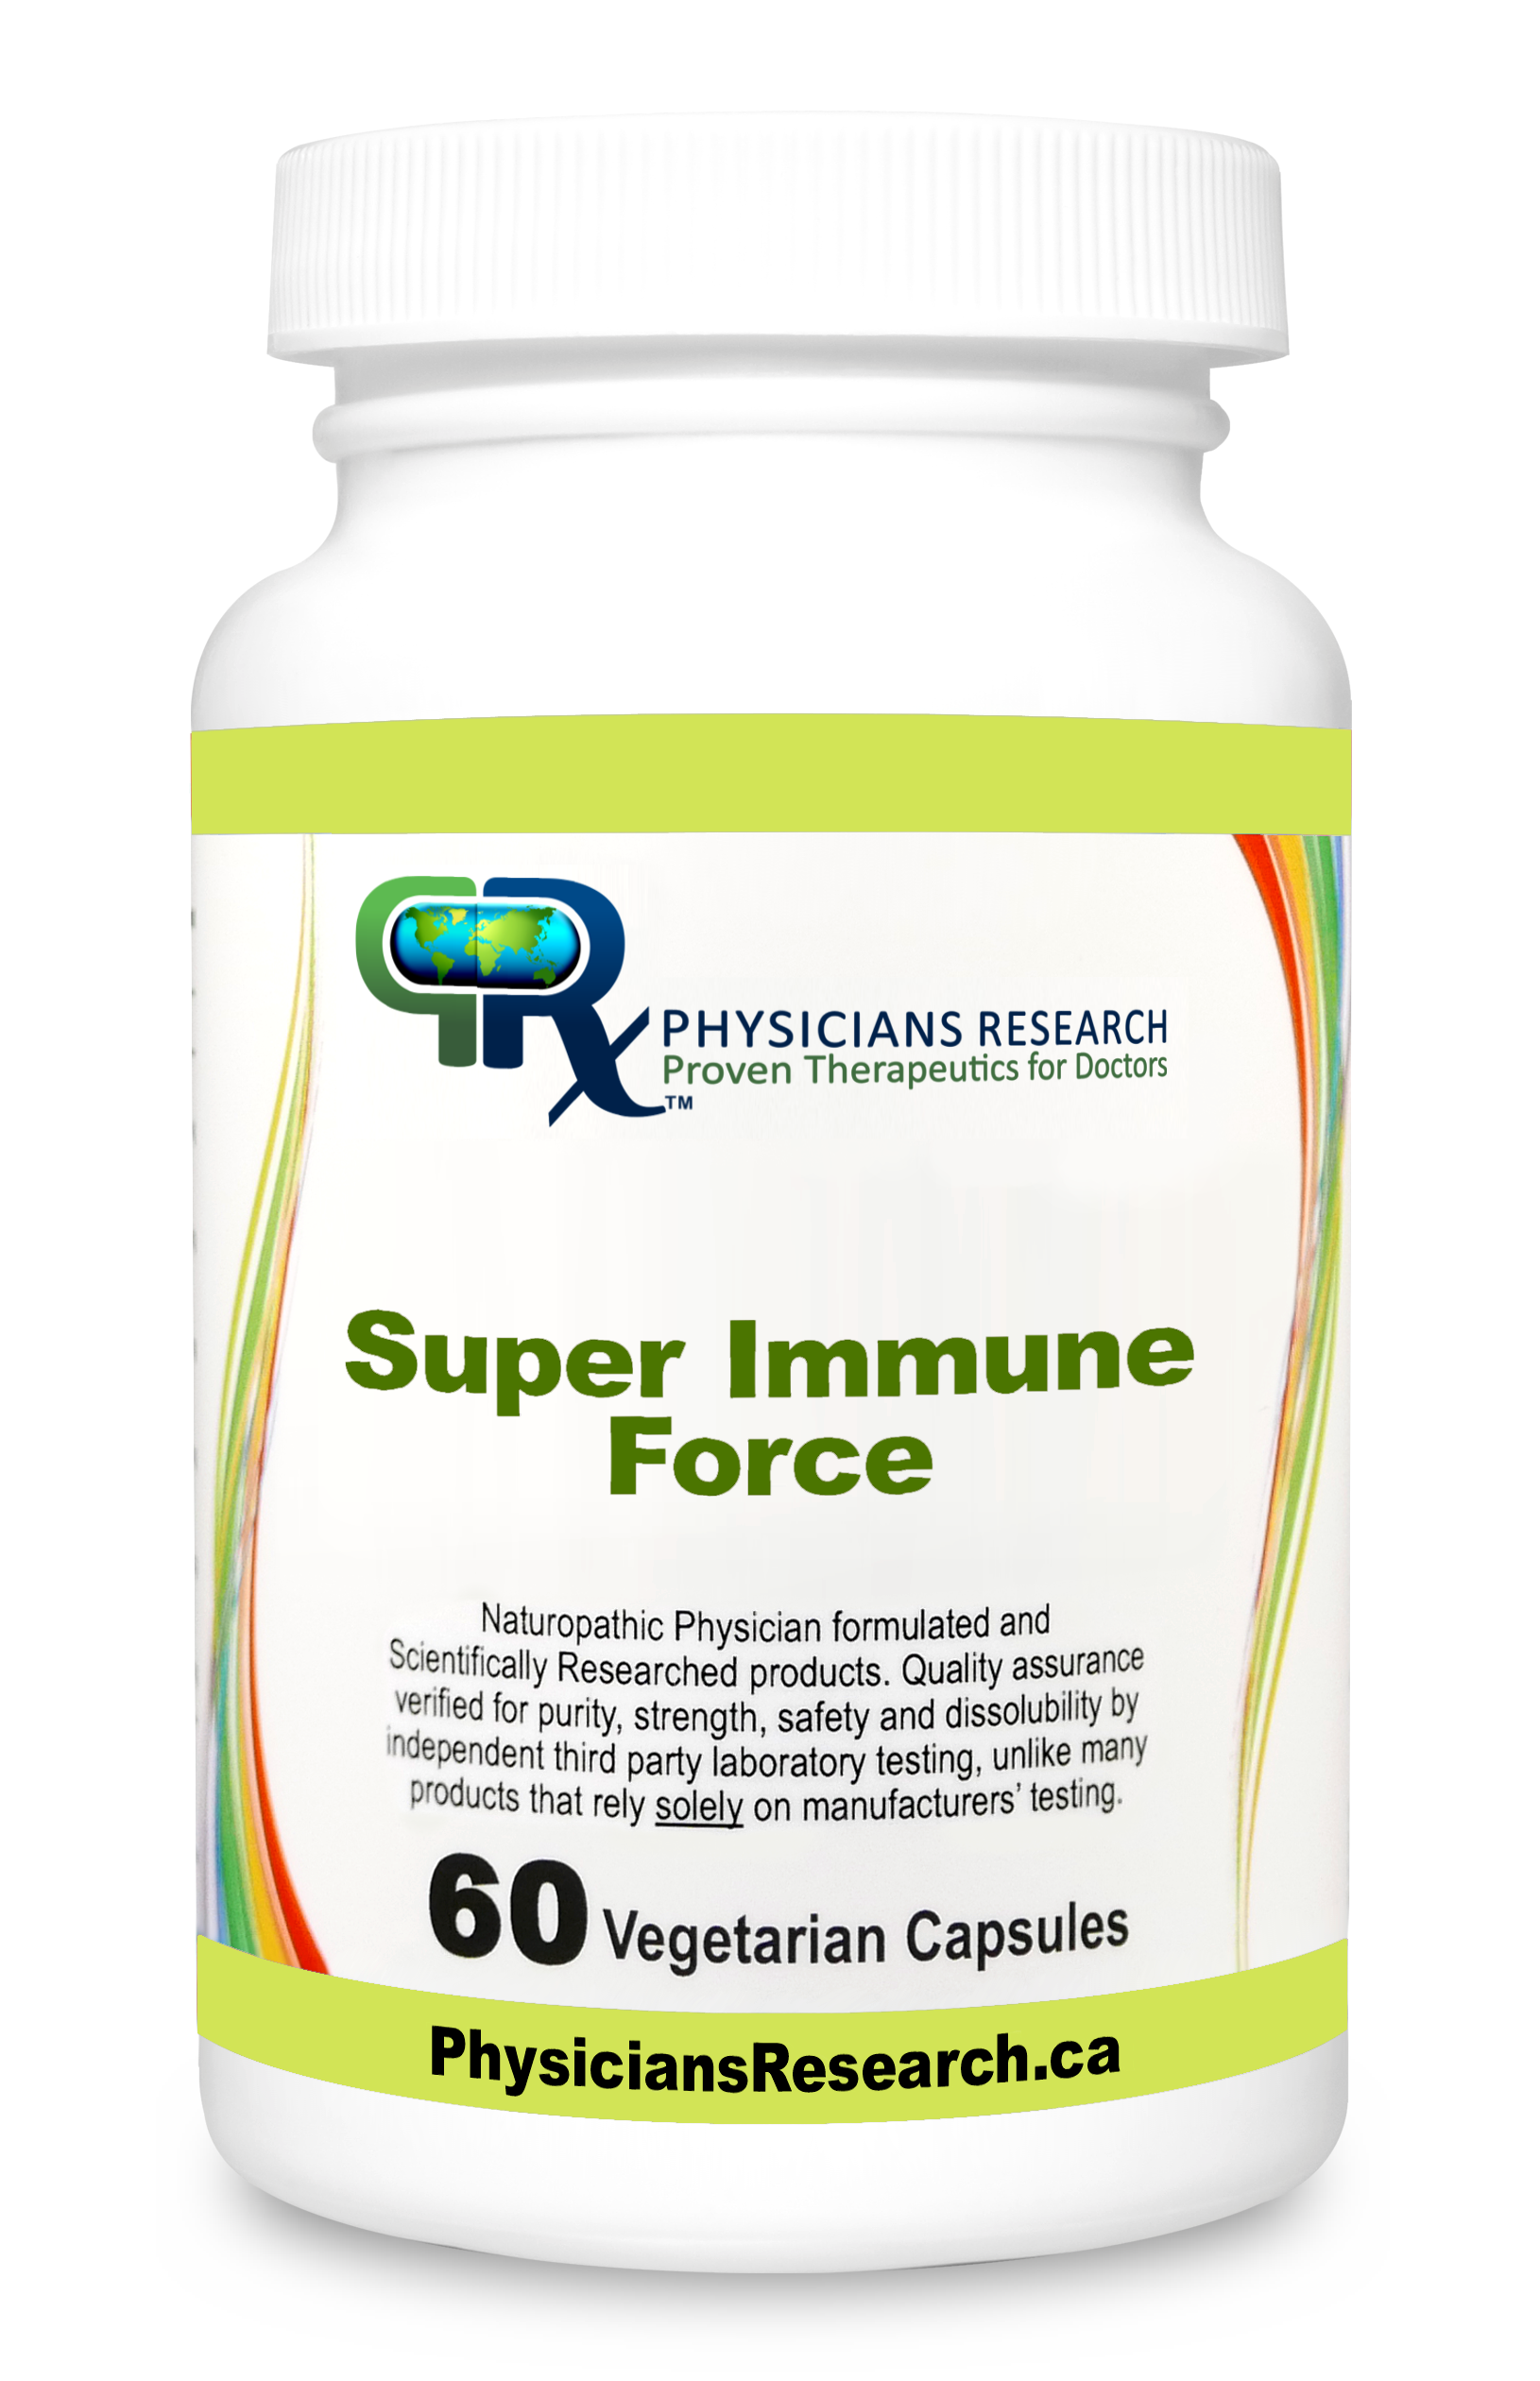 Immune support supplements